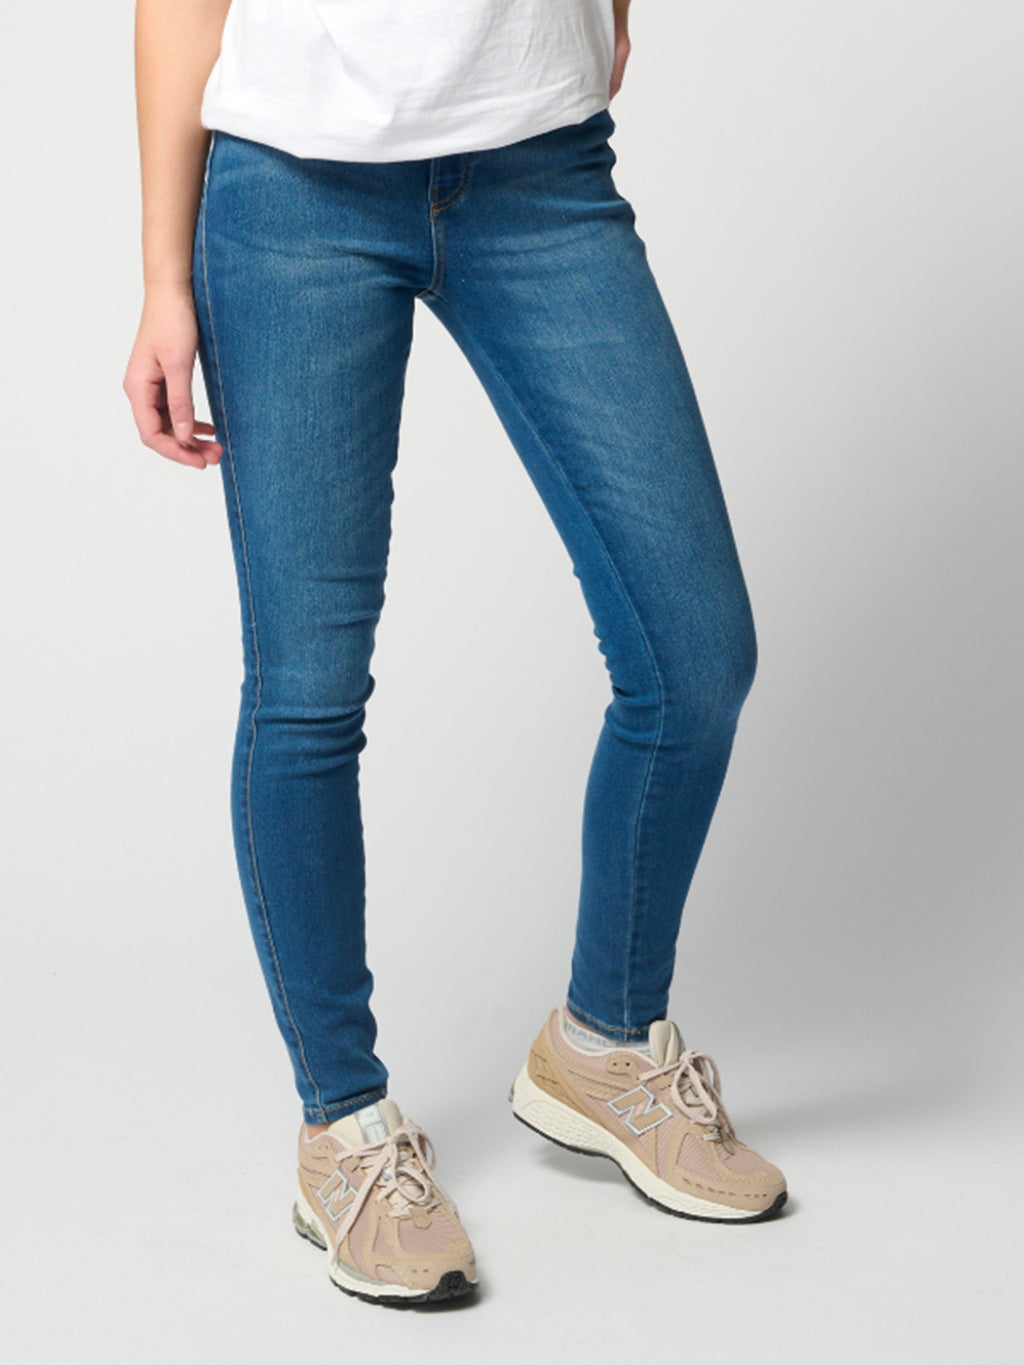 Le jean skinny de performance original - denim bleu moyen